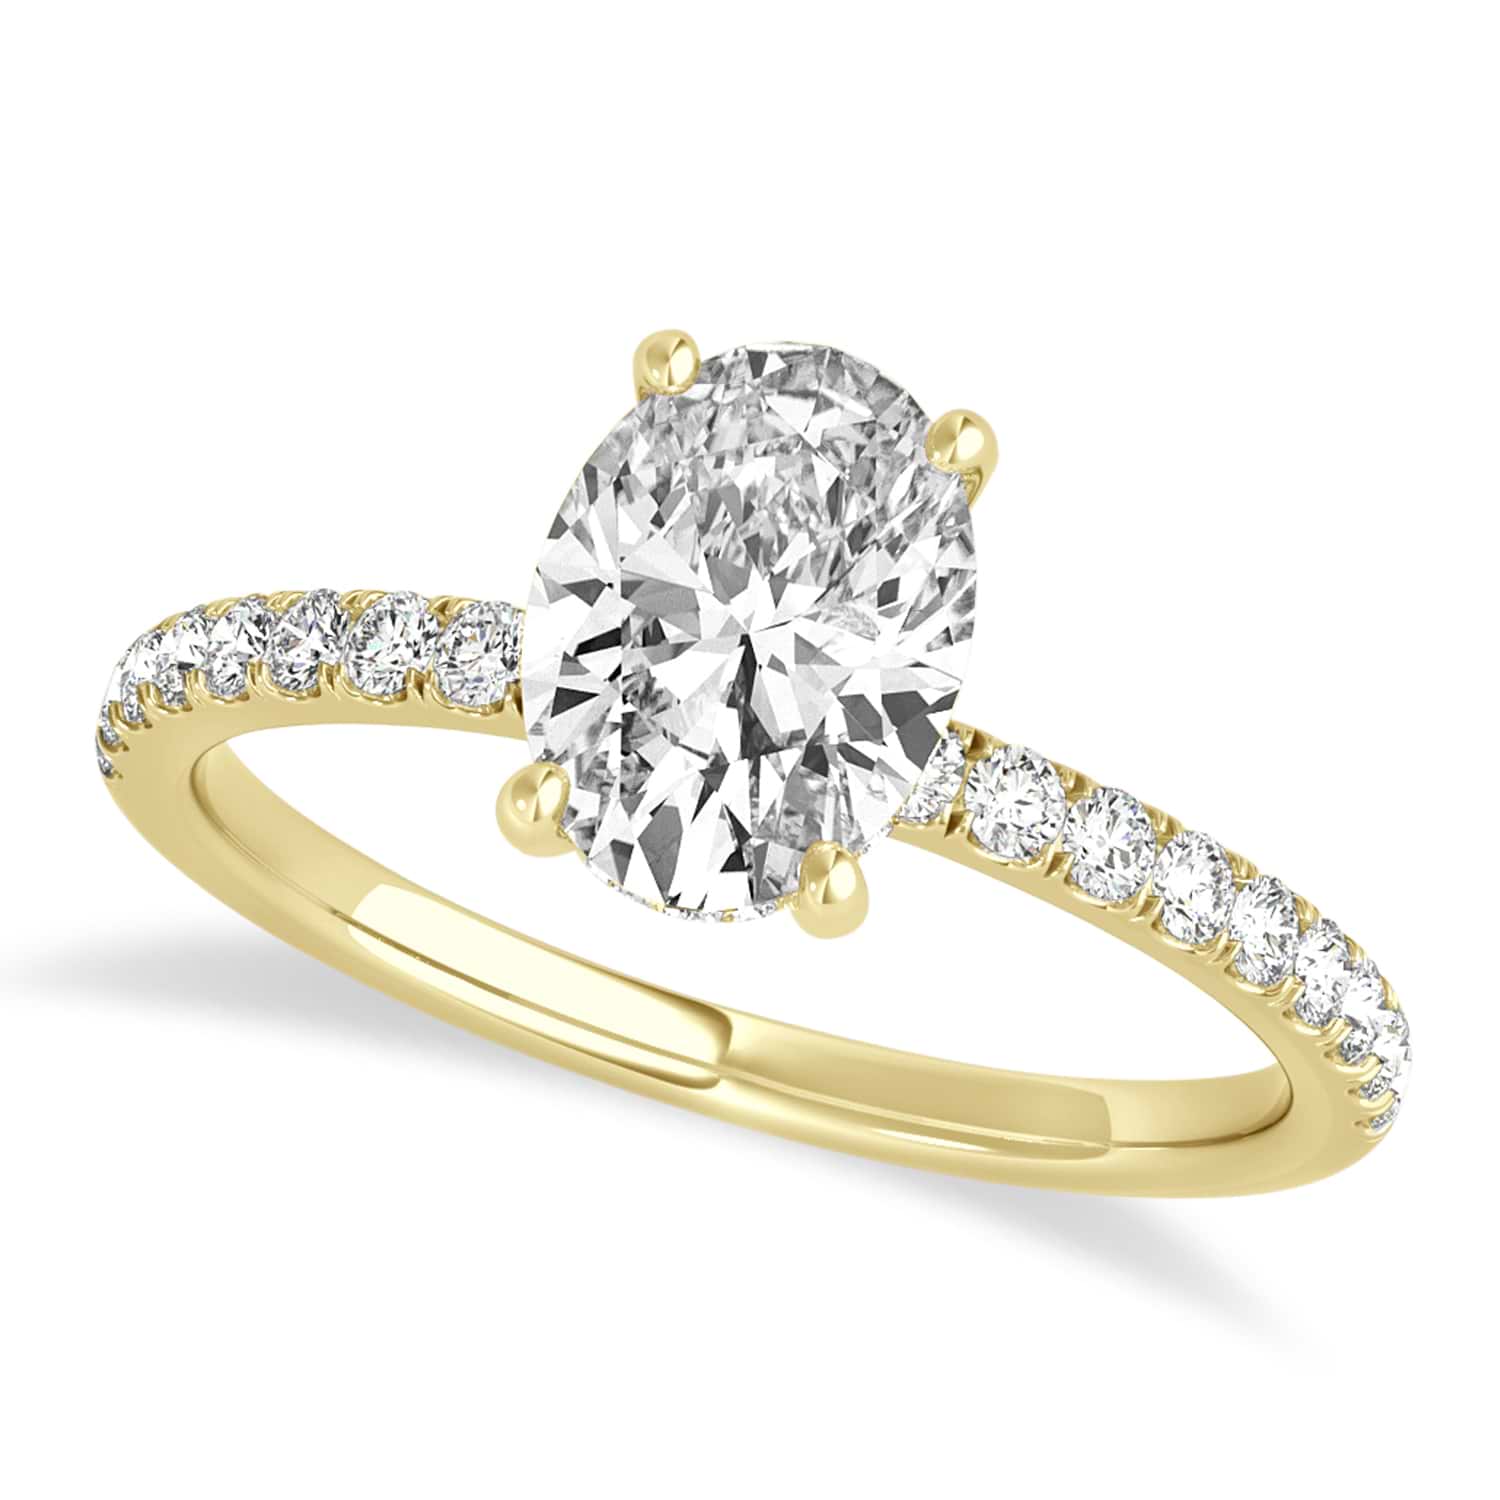 Oval Lab Grown Diamond Single Row Hidden Halo Engagement Ring 14k Yellow Gold (2.50ct)